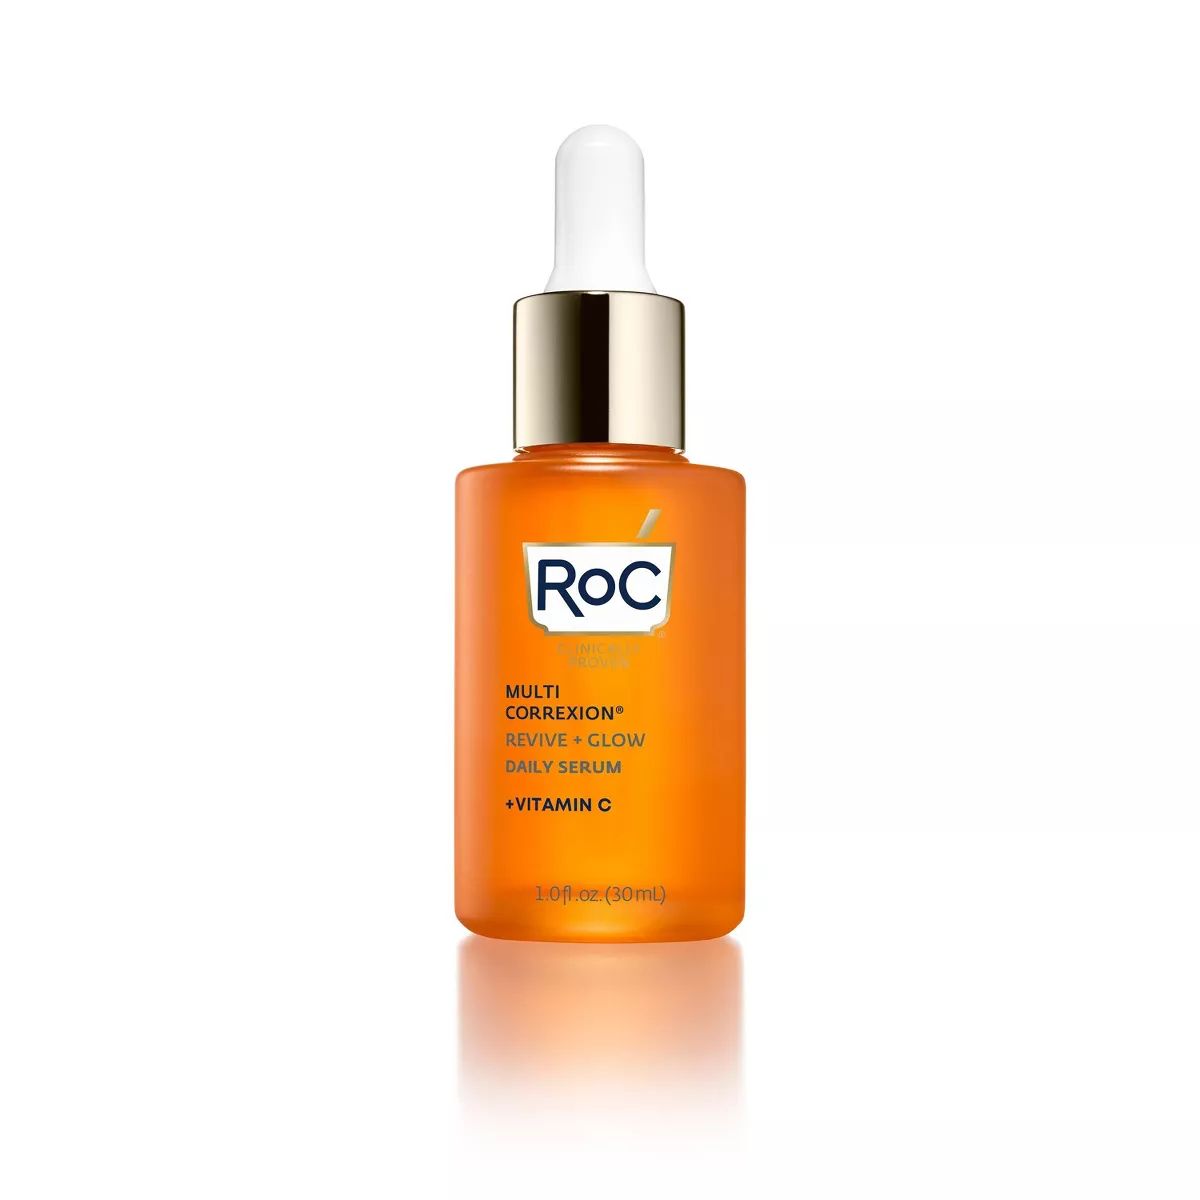 RoC Brightening Anti-Aging Serum with Vitamin C for Dark Spots - 1.0 fl oz | Target